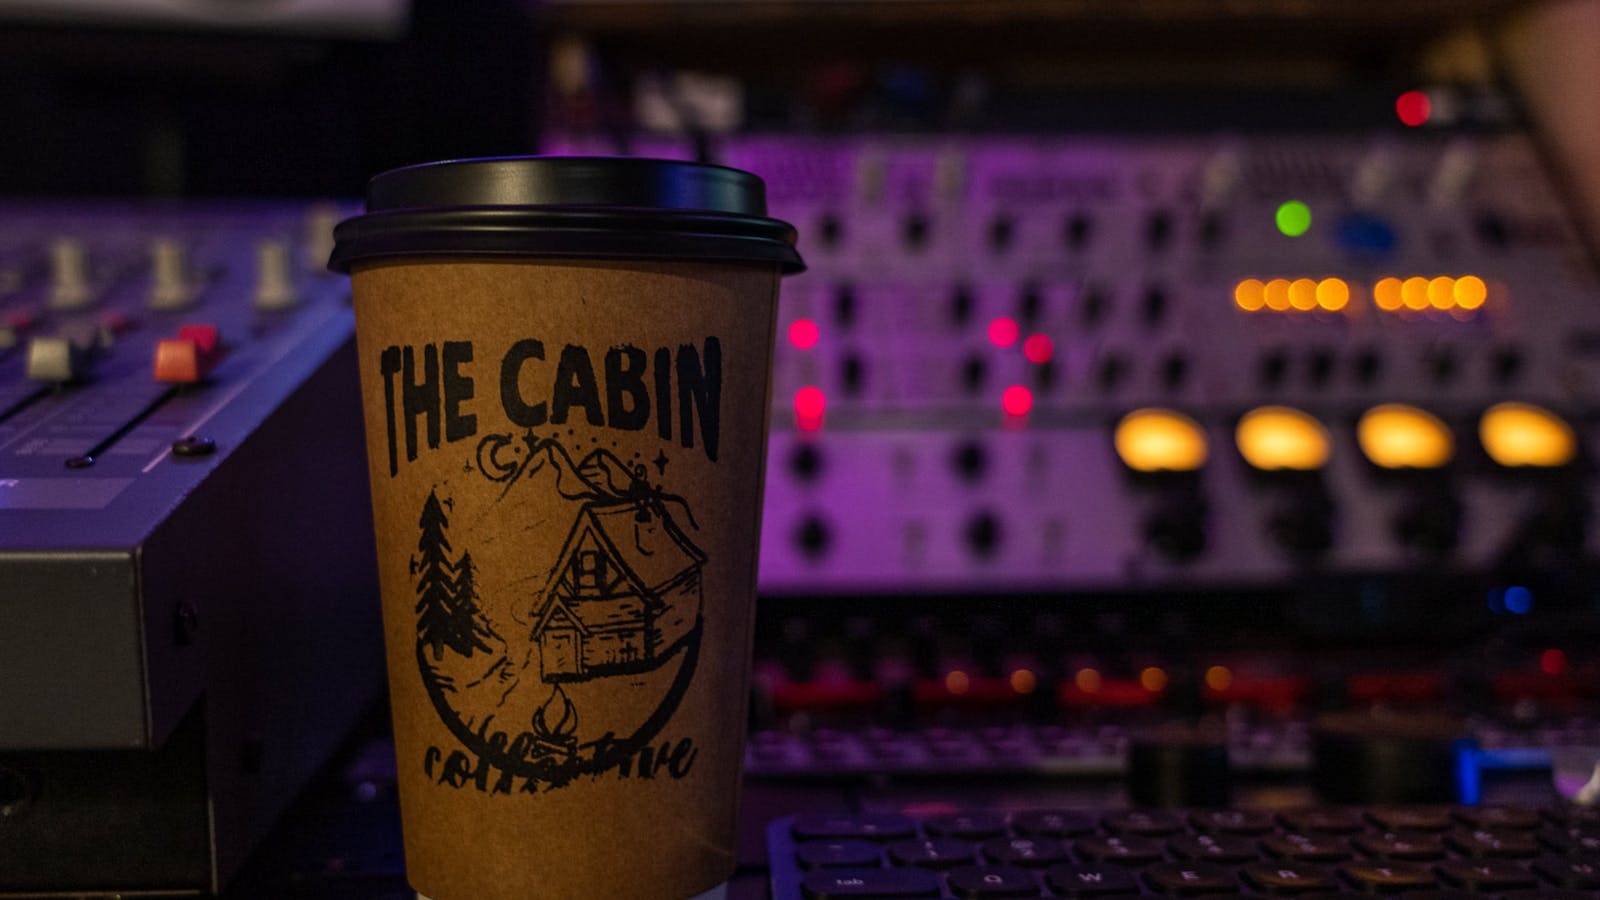 Cabin Fever Studios